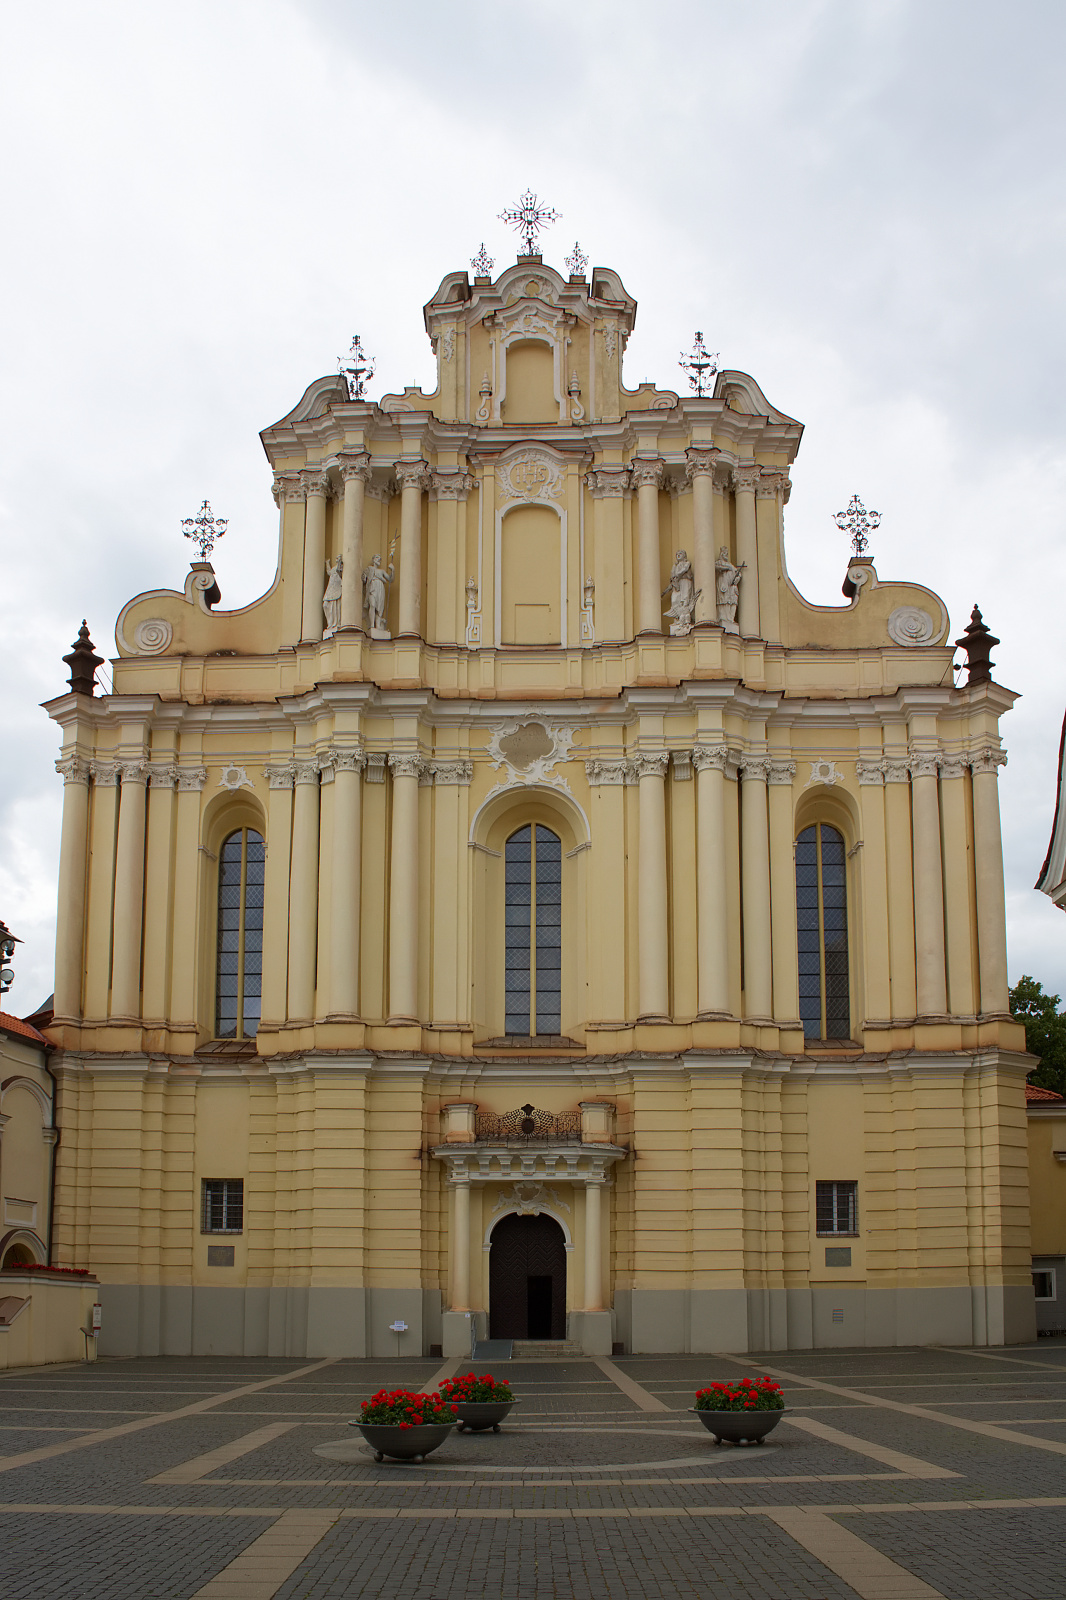 Church of St. Johns, St. John the Baptist and St. John the Apostle and Evangelist (Travels » Vilnius » Churches)